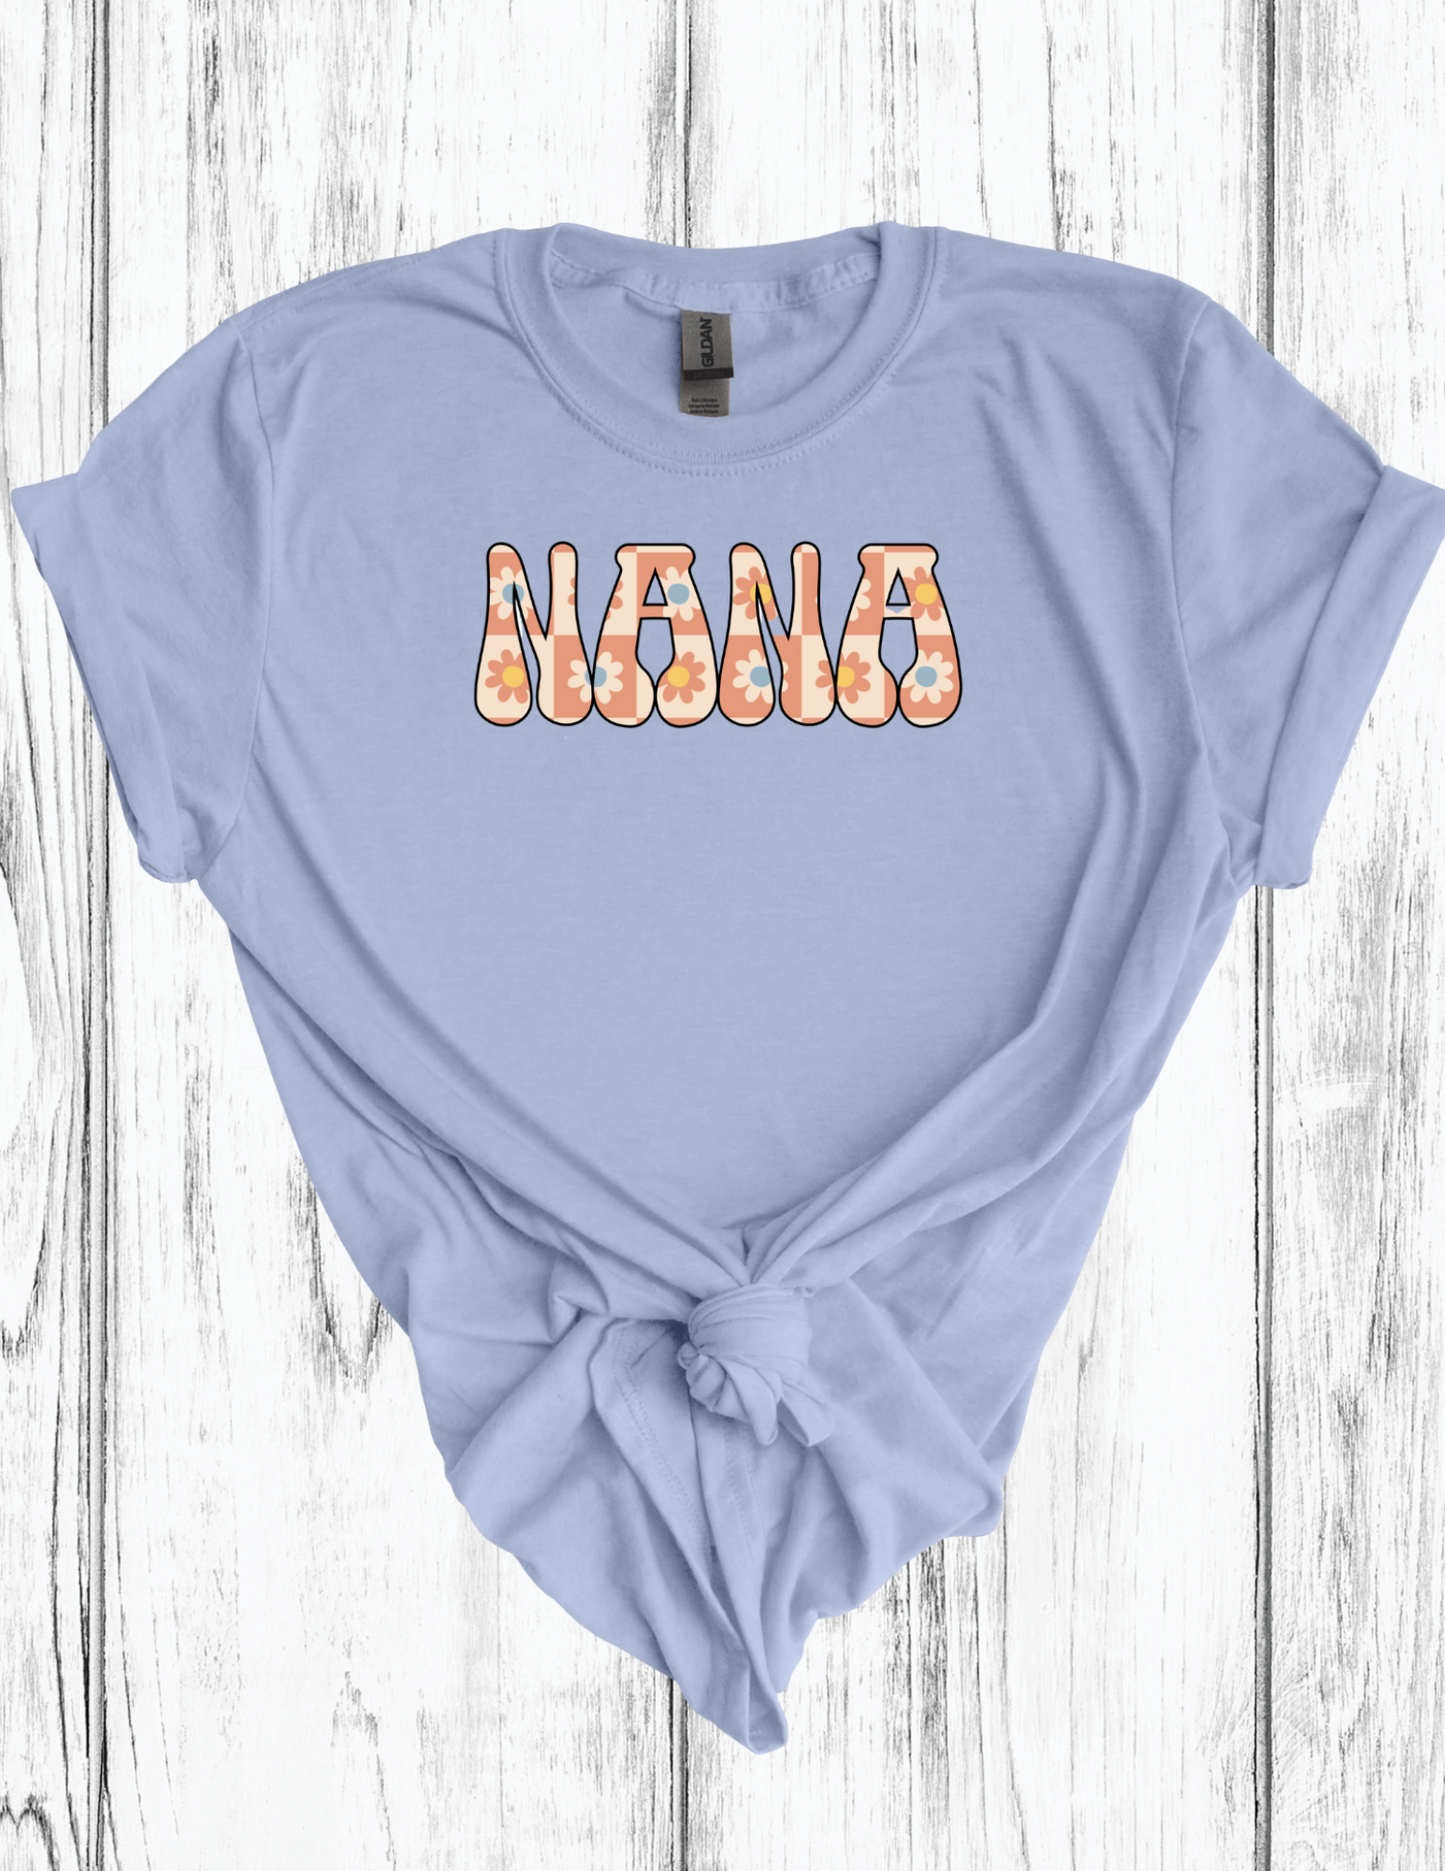 Nana Retro Flower Print T-Shirt (can customize to say grandma, grammy, nannny, etc)